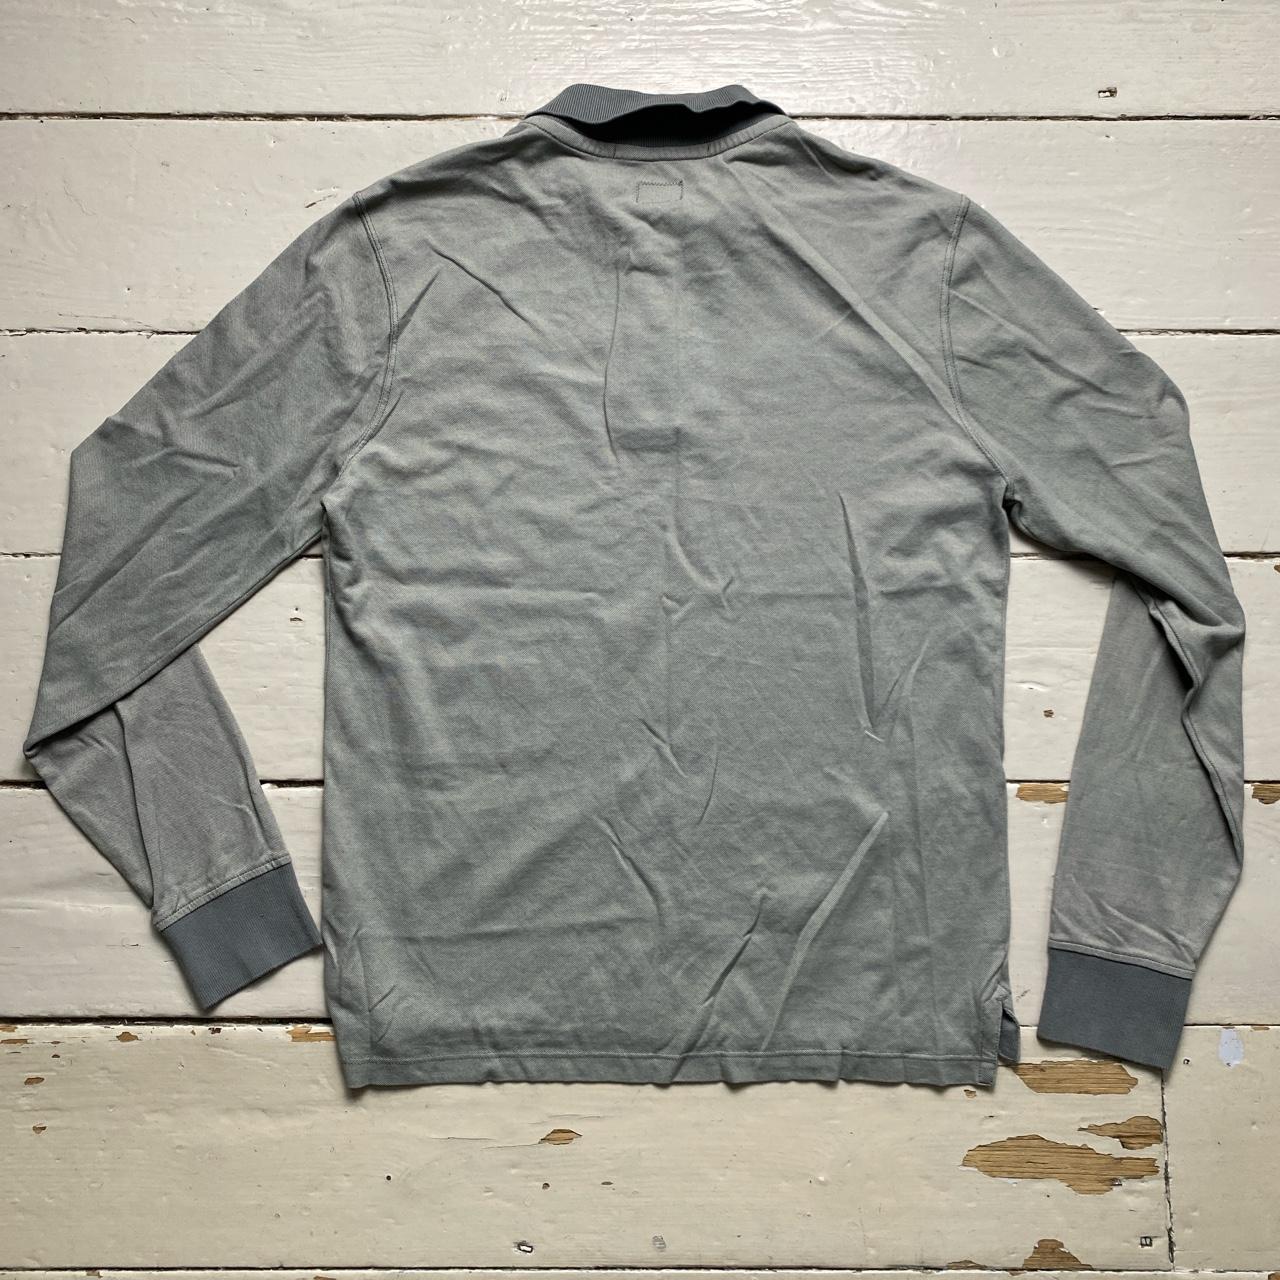 CP Company Grey Long Sleeve Polo Shirt